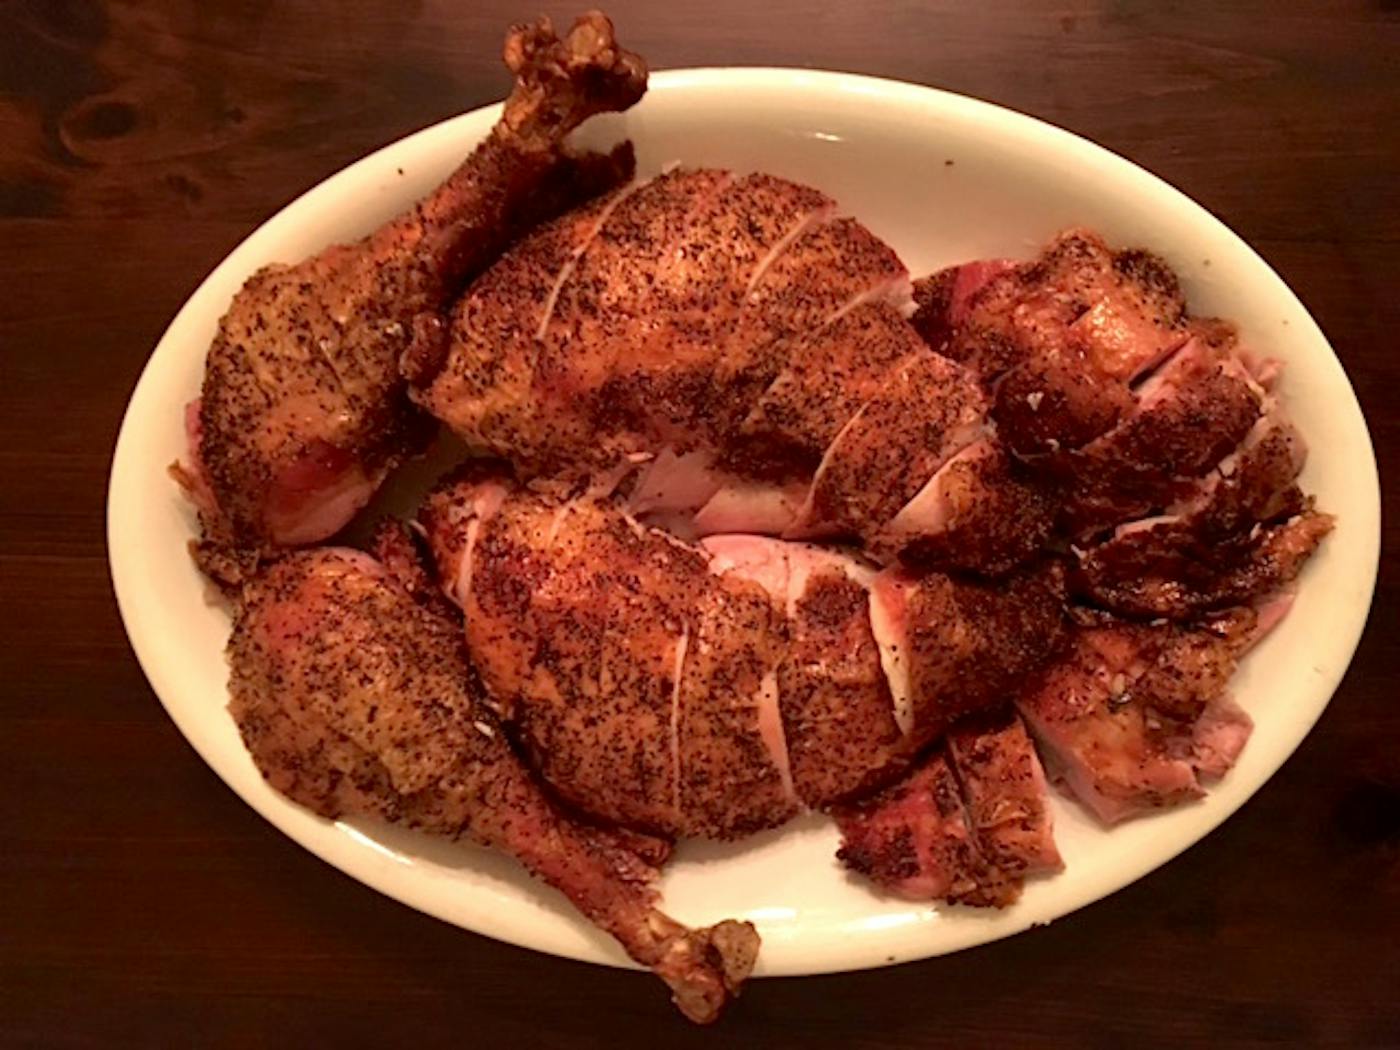 Oil Less Fried Turkey with Crispy Skin HEALTHY